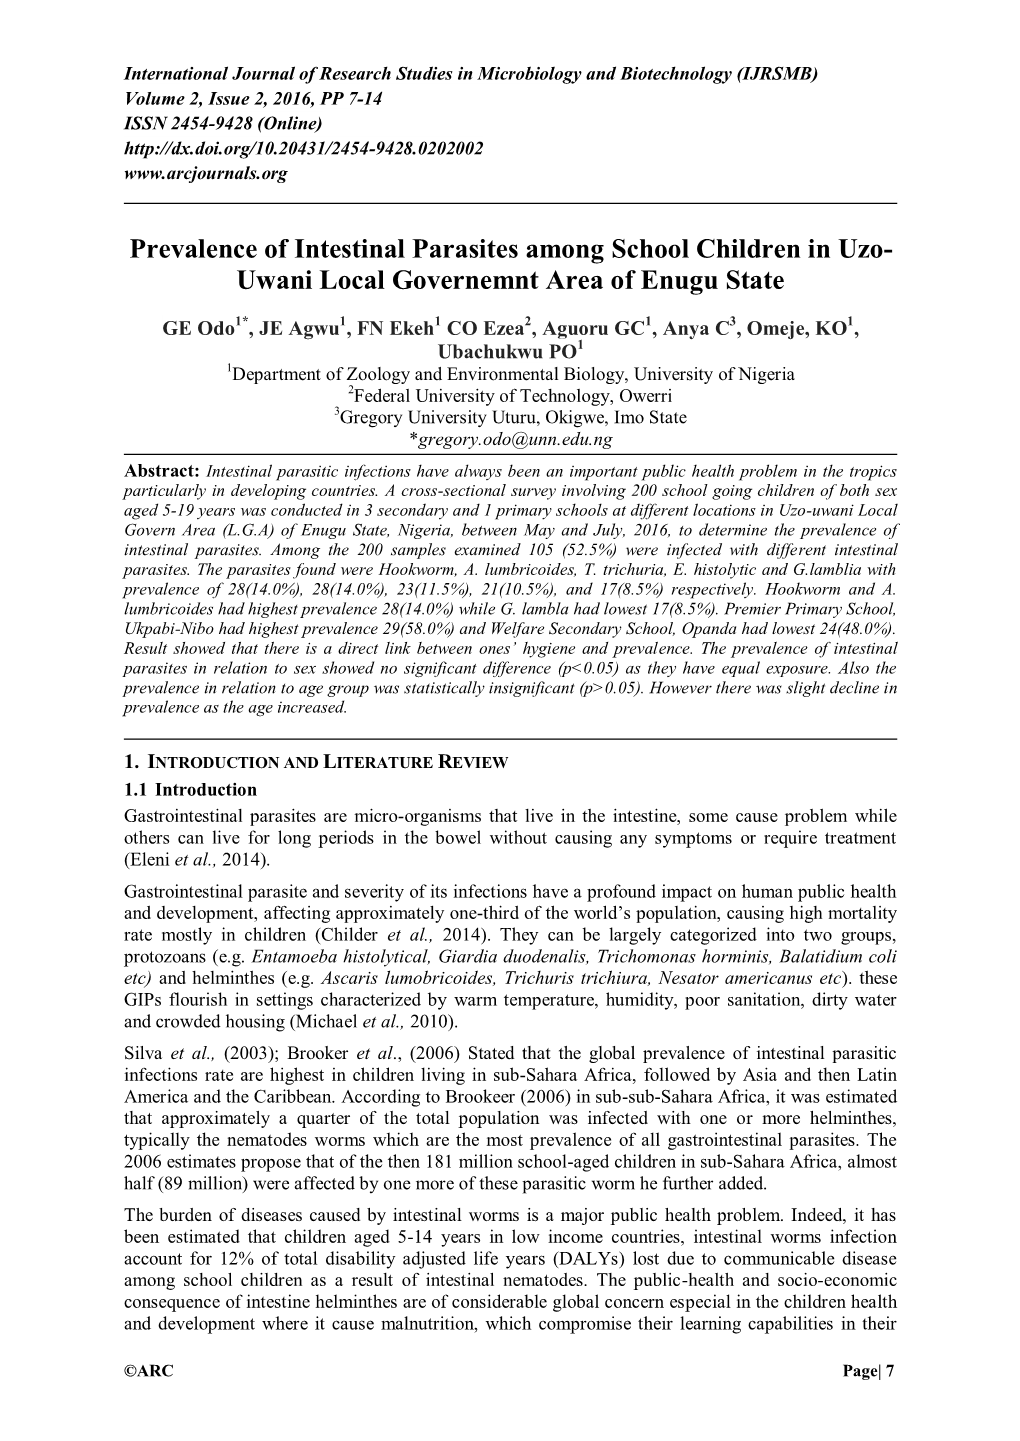 Prevalence of Intestinal Parasites Among School Children in Uzo- Uwani Local Governemnt Area of Enugu State